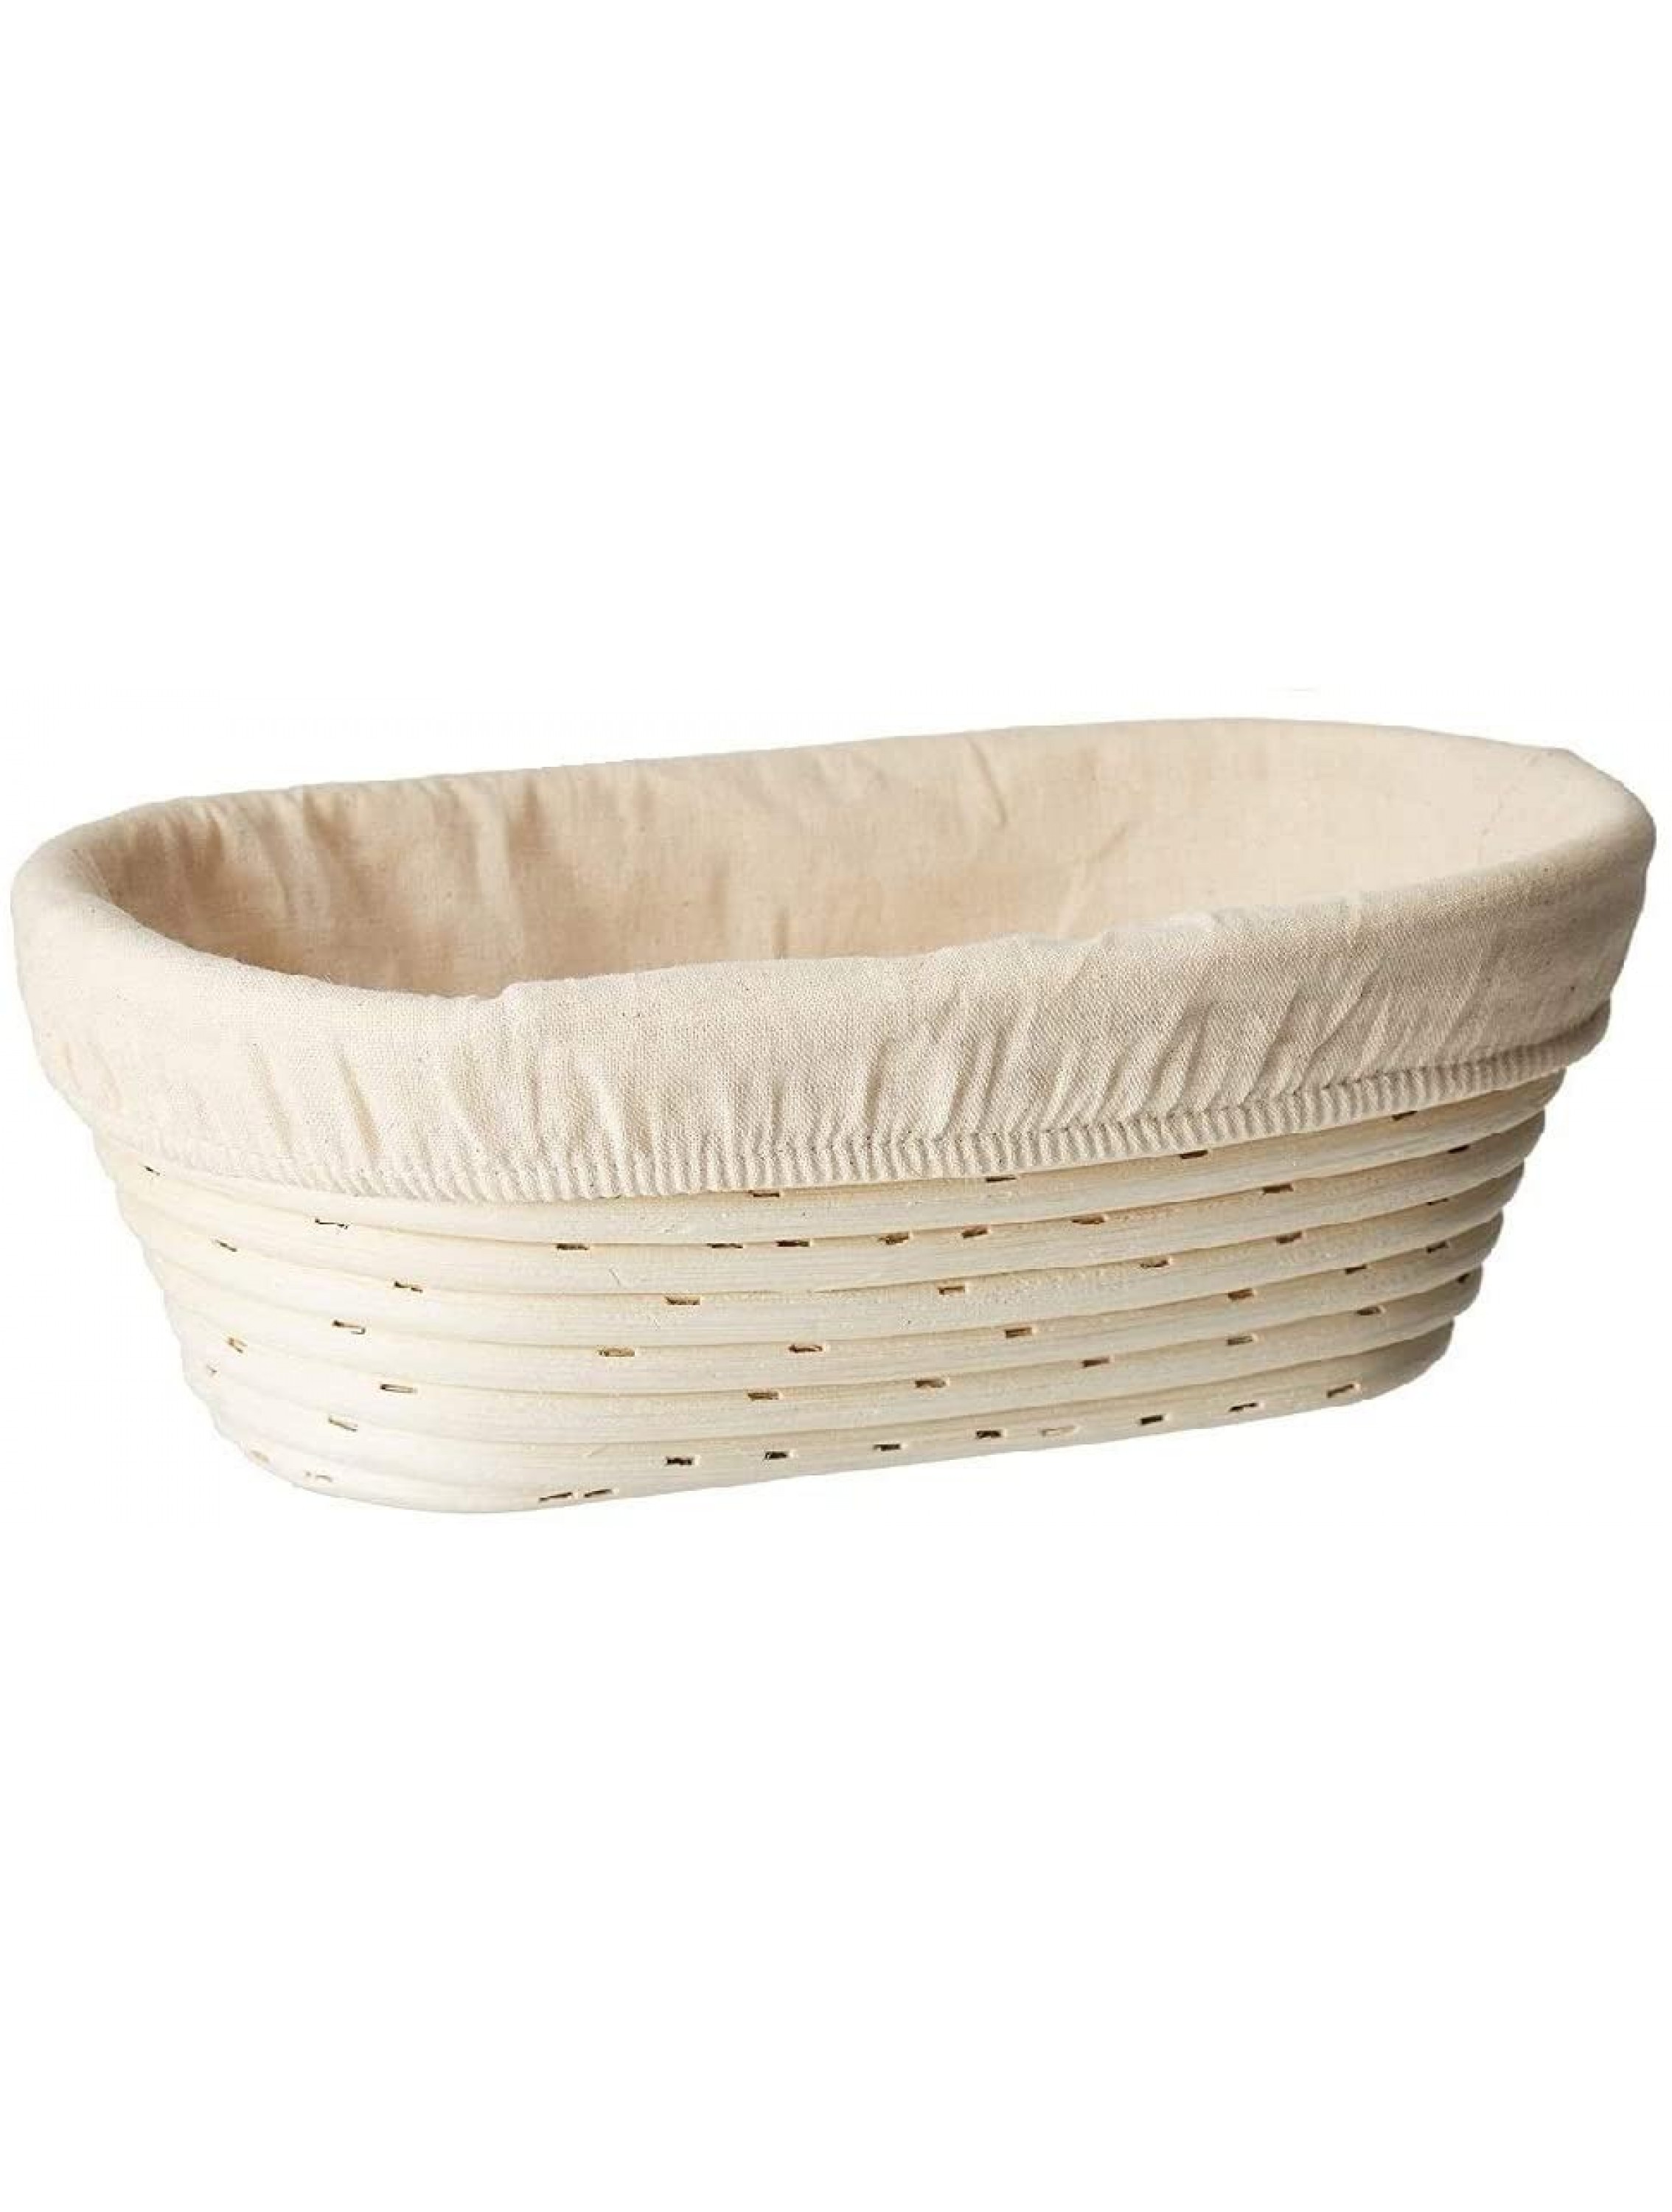 10 x 6 x 3.5 inch Oval Bread Banneton Proofing Basket & Liner SUGUS HOUSE Brotform Dough Rising Rattan Handmade rattan bowl Perfect For Artisan - B517JP3DH